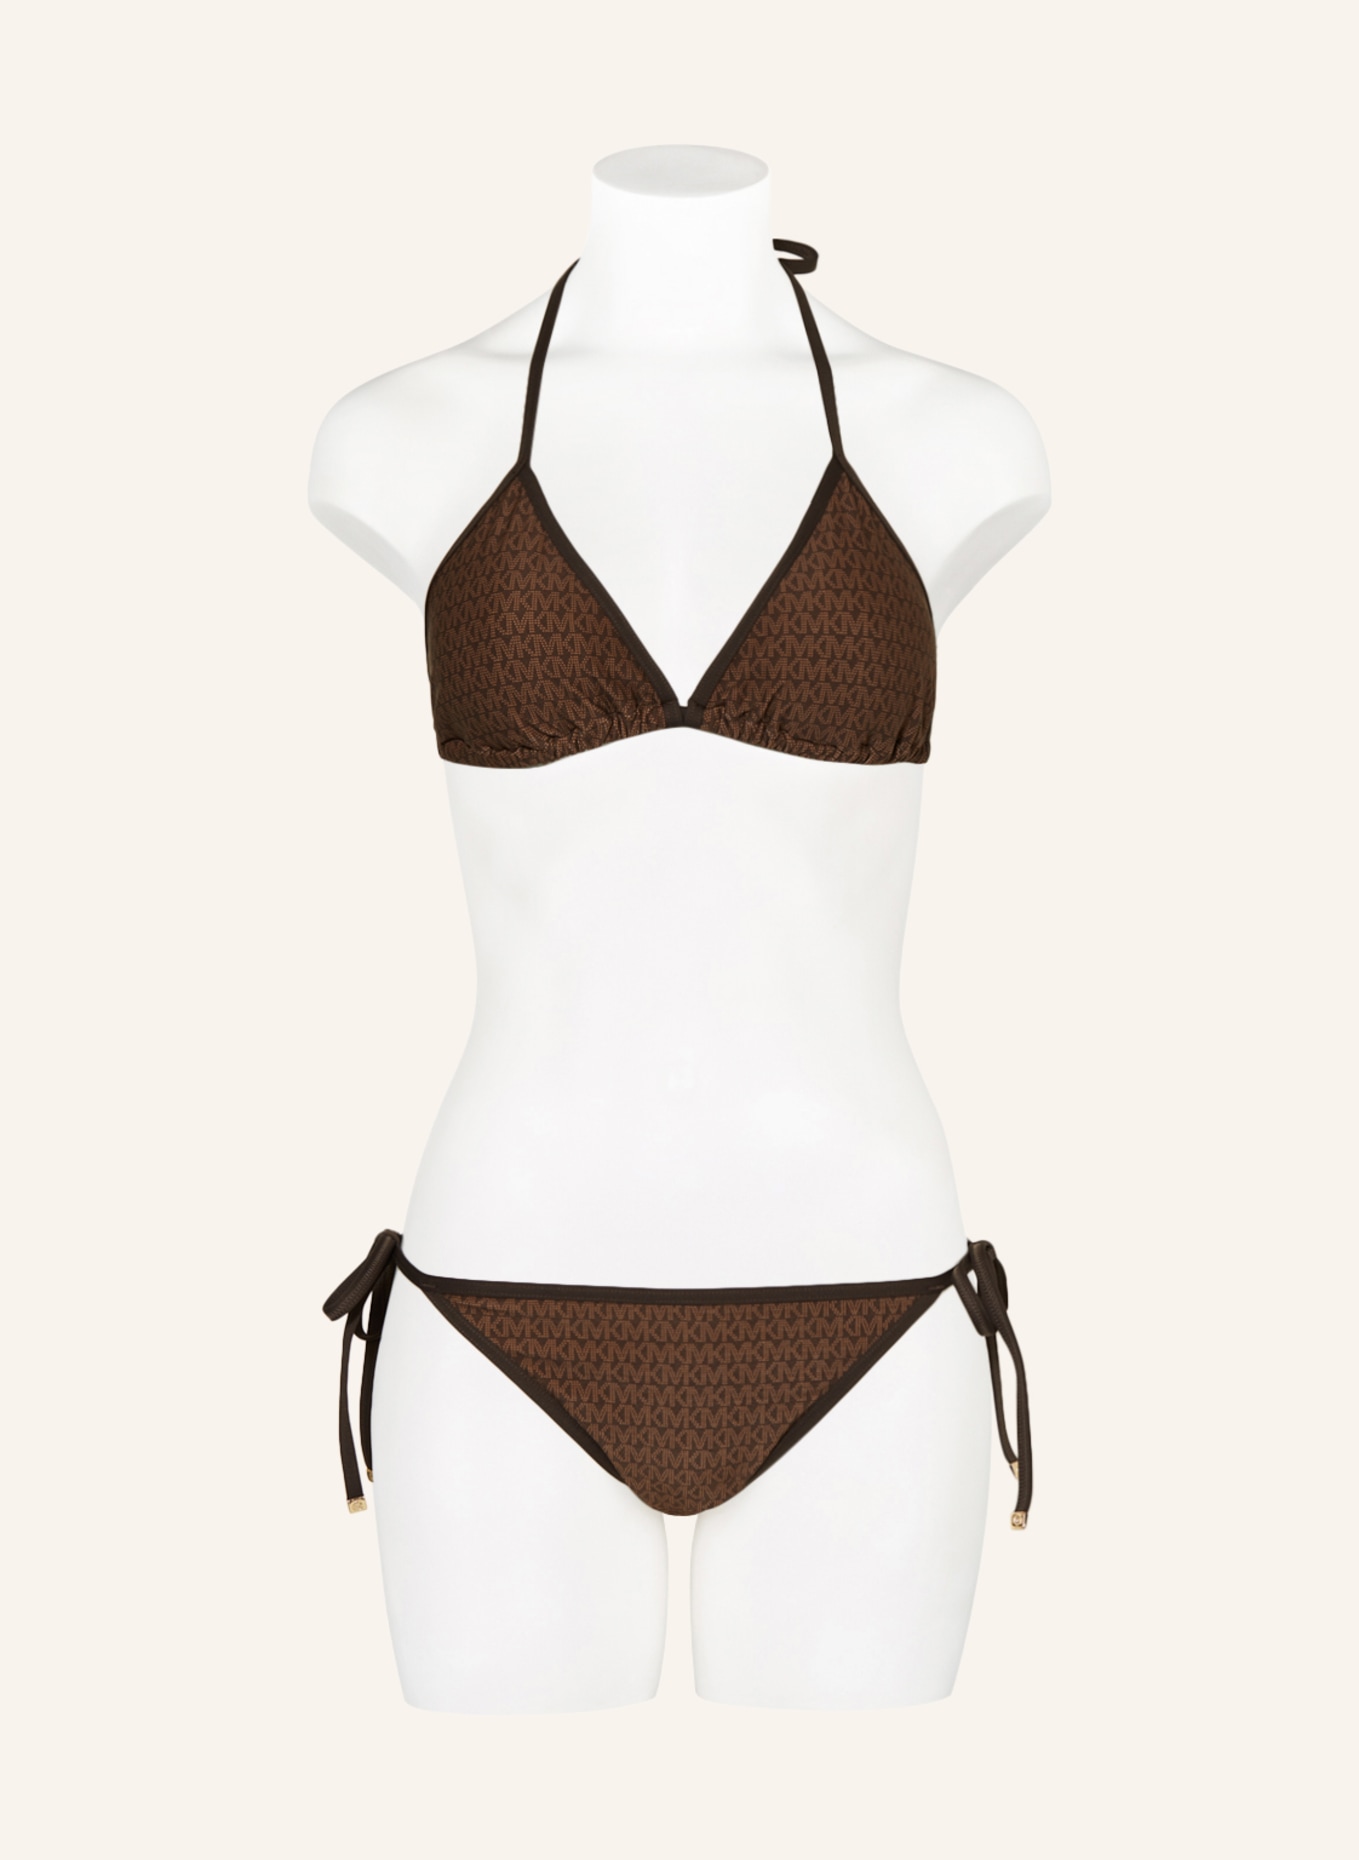 Michael Kors Women's Iconic Solids Triangle Bikini Top at